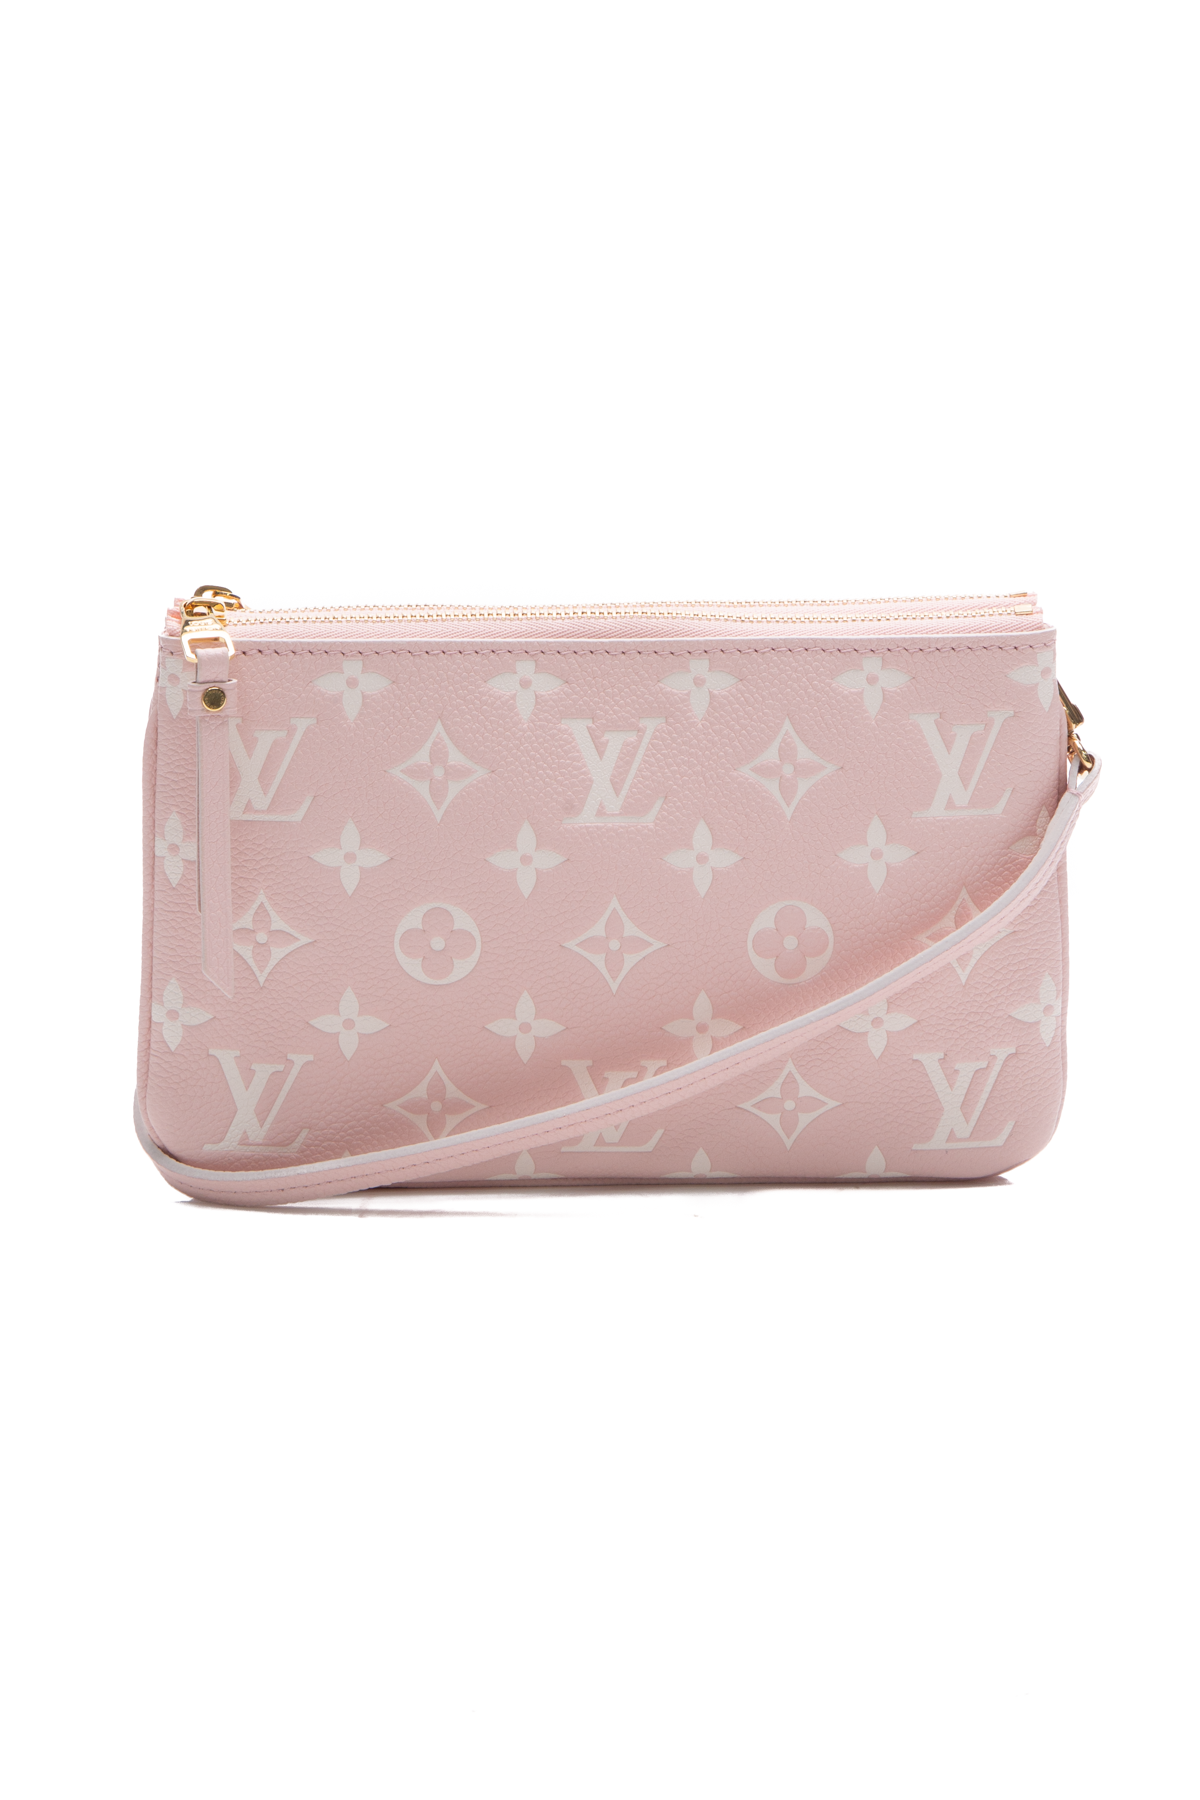 Louis Vuitton, Bags, Rare Louis Vuitton Leather Pink Crossbody Twice